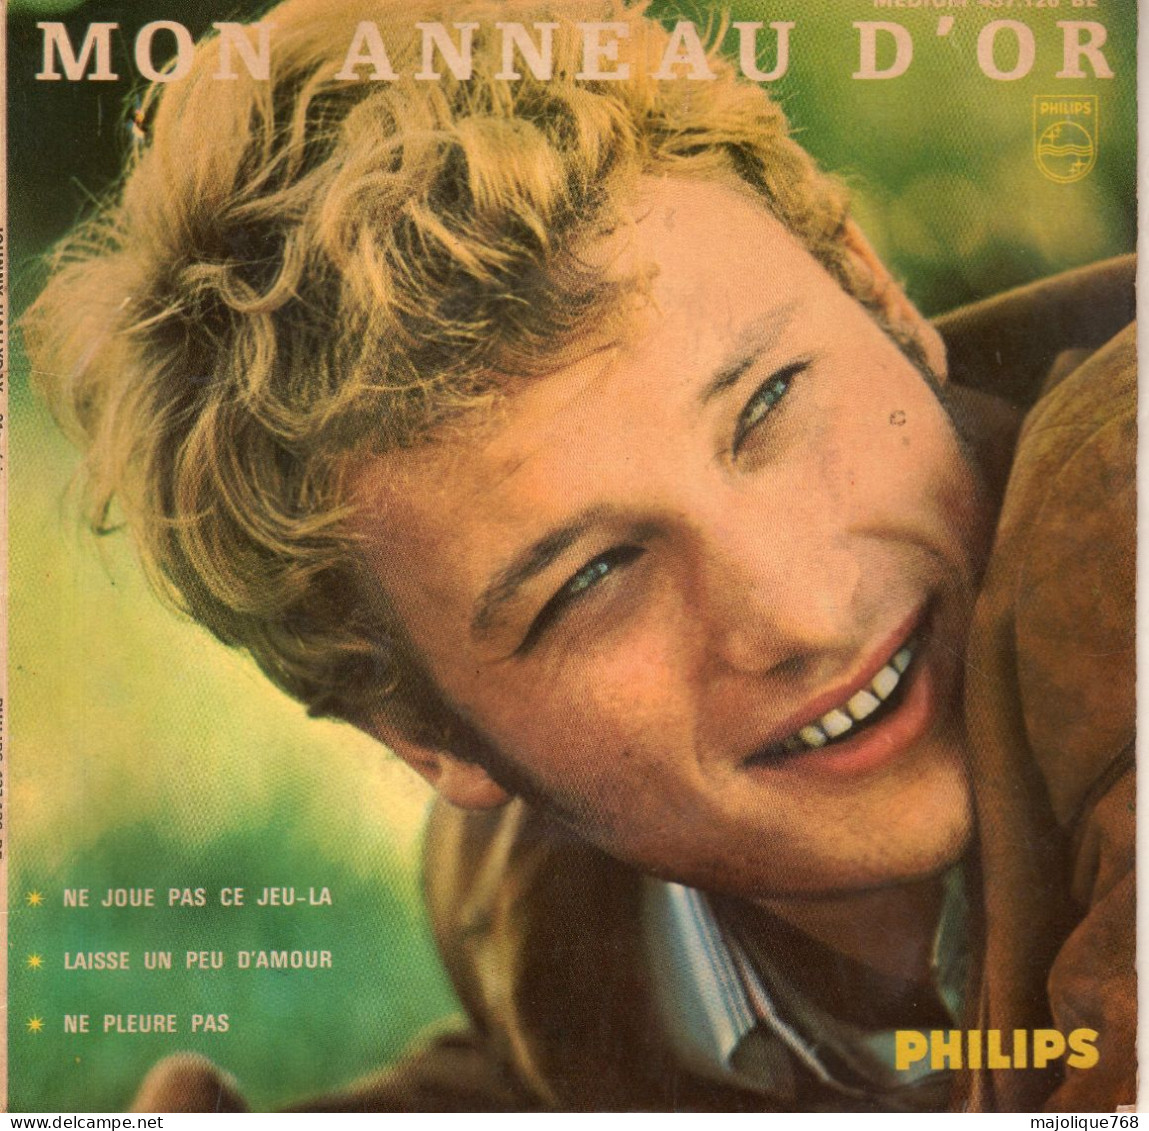 Disque De Johnny Hallyday - Mon Anneau D'or - Philips 437.126 BE - France 1965 - Rock